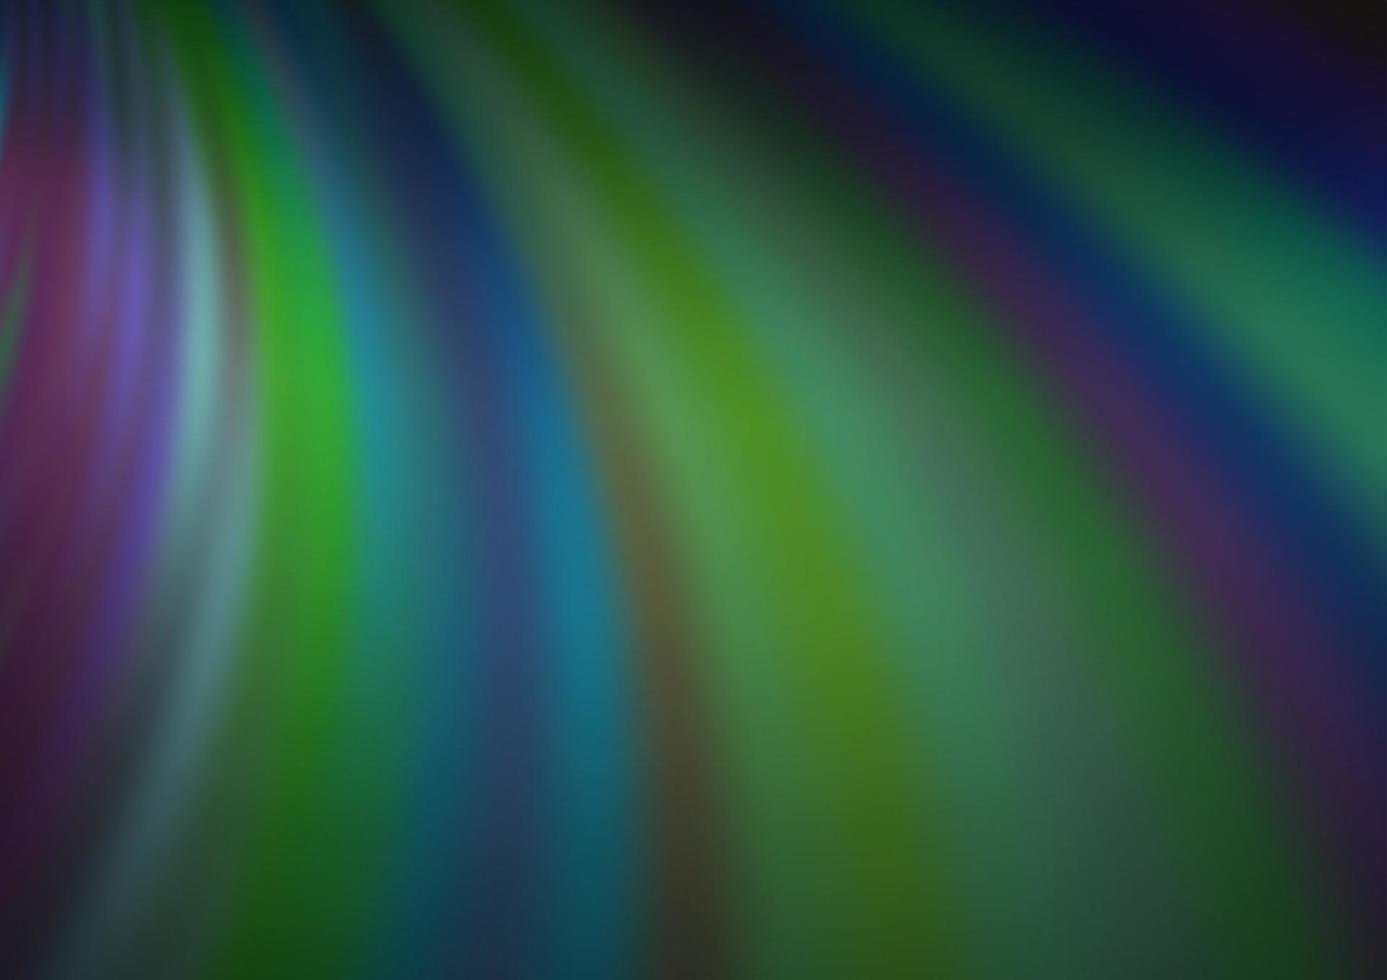 dunkelblaue, grüne Vektorvorlage mit abstrakten Linien. vektor